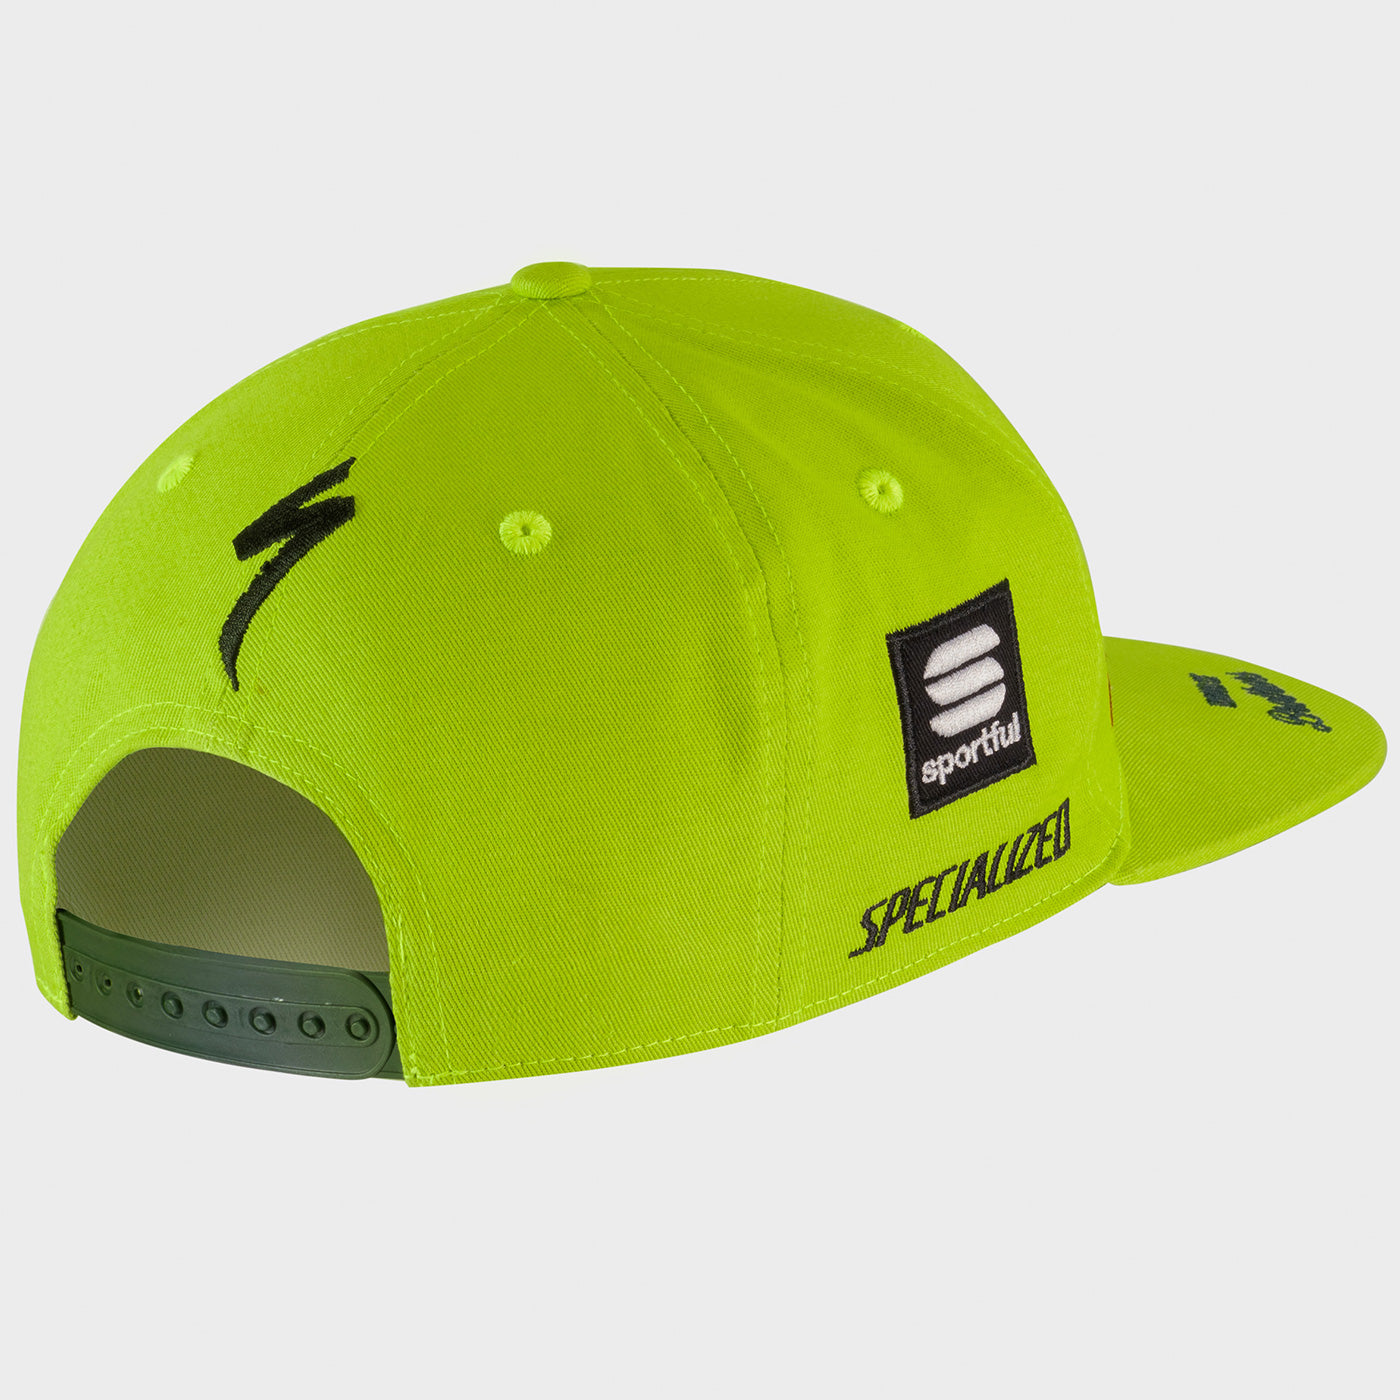 Sportful Bora Hansgrohe 2024 Snapback cap